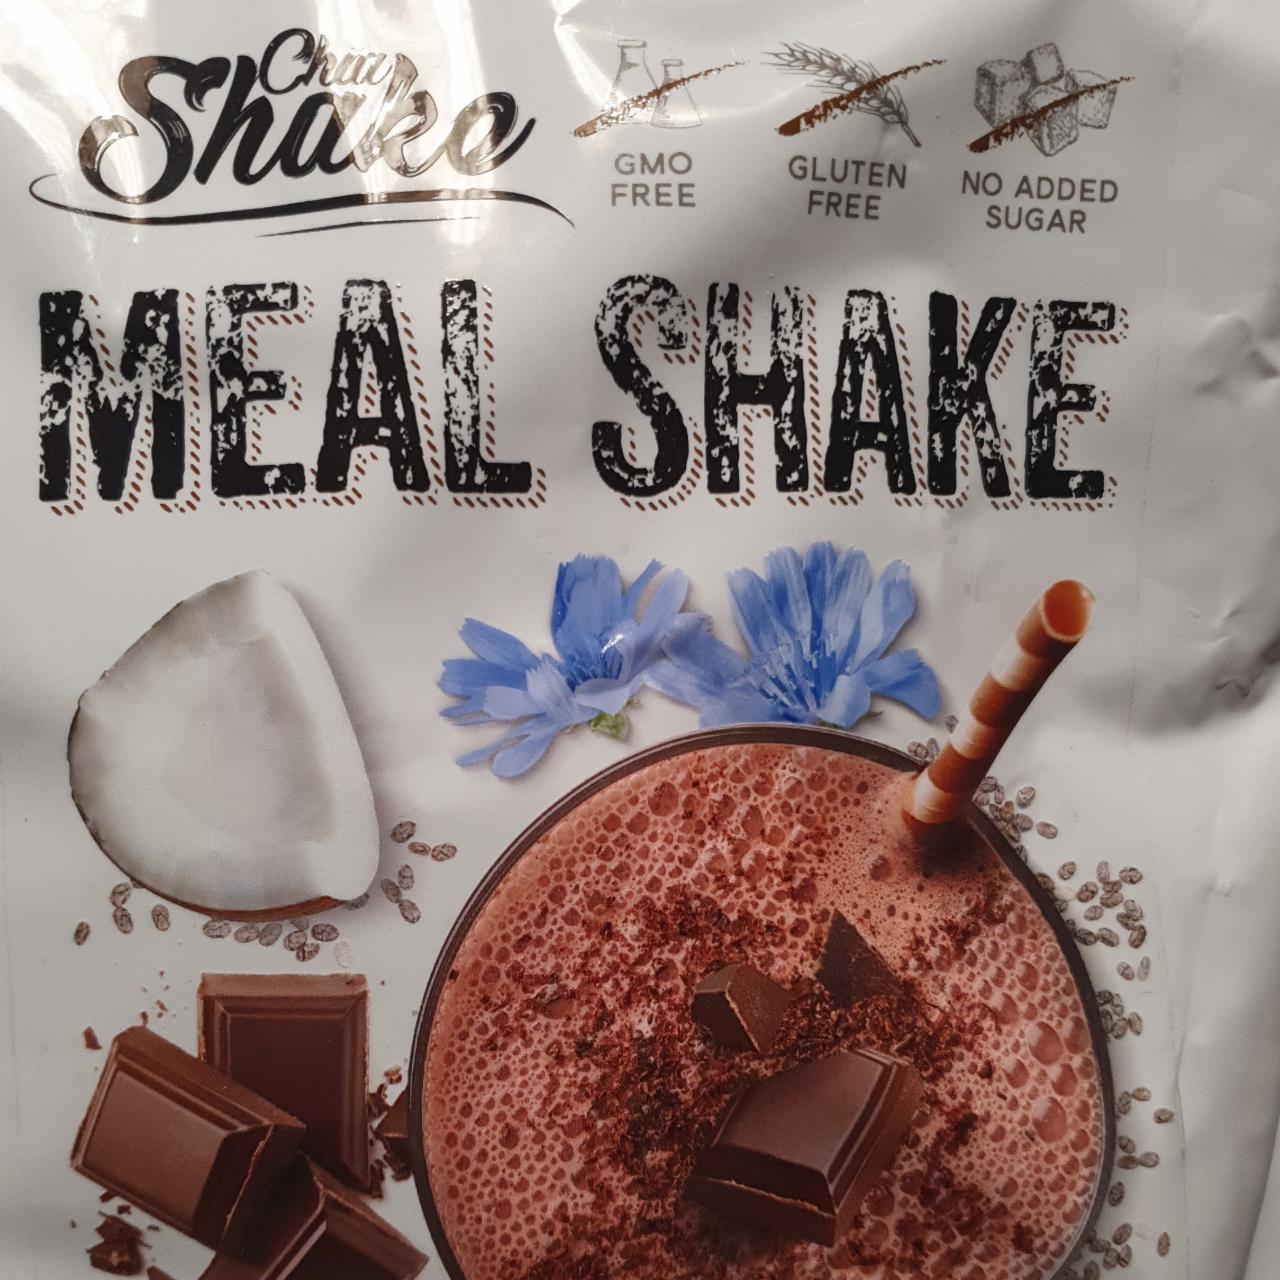 Fotografie - Meal shake Chocolate ChiaShake